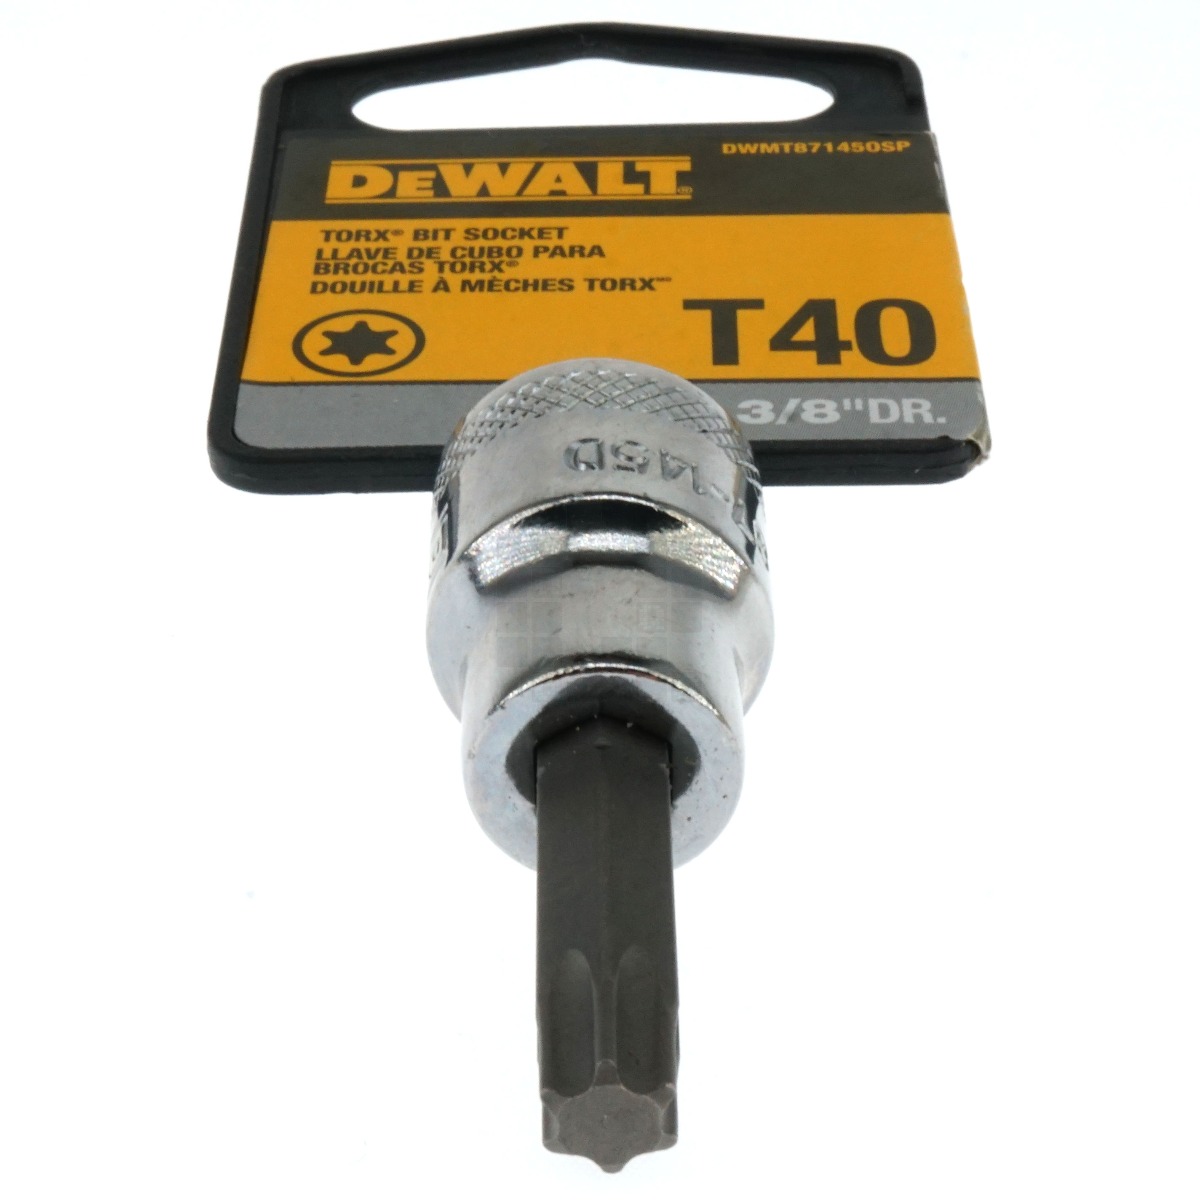 Dewalt DWMT871450SP T40 Chrome Torx Bit Socket, 3/8 Drive, 87-145D